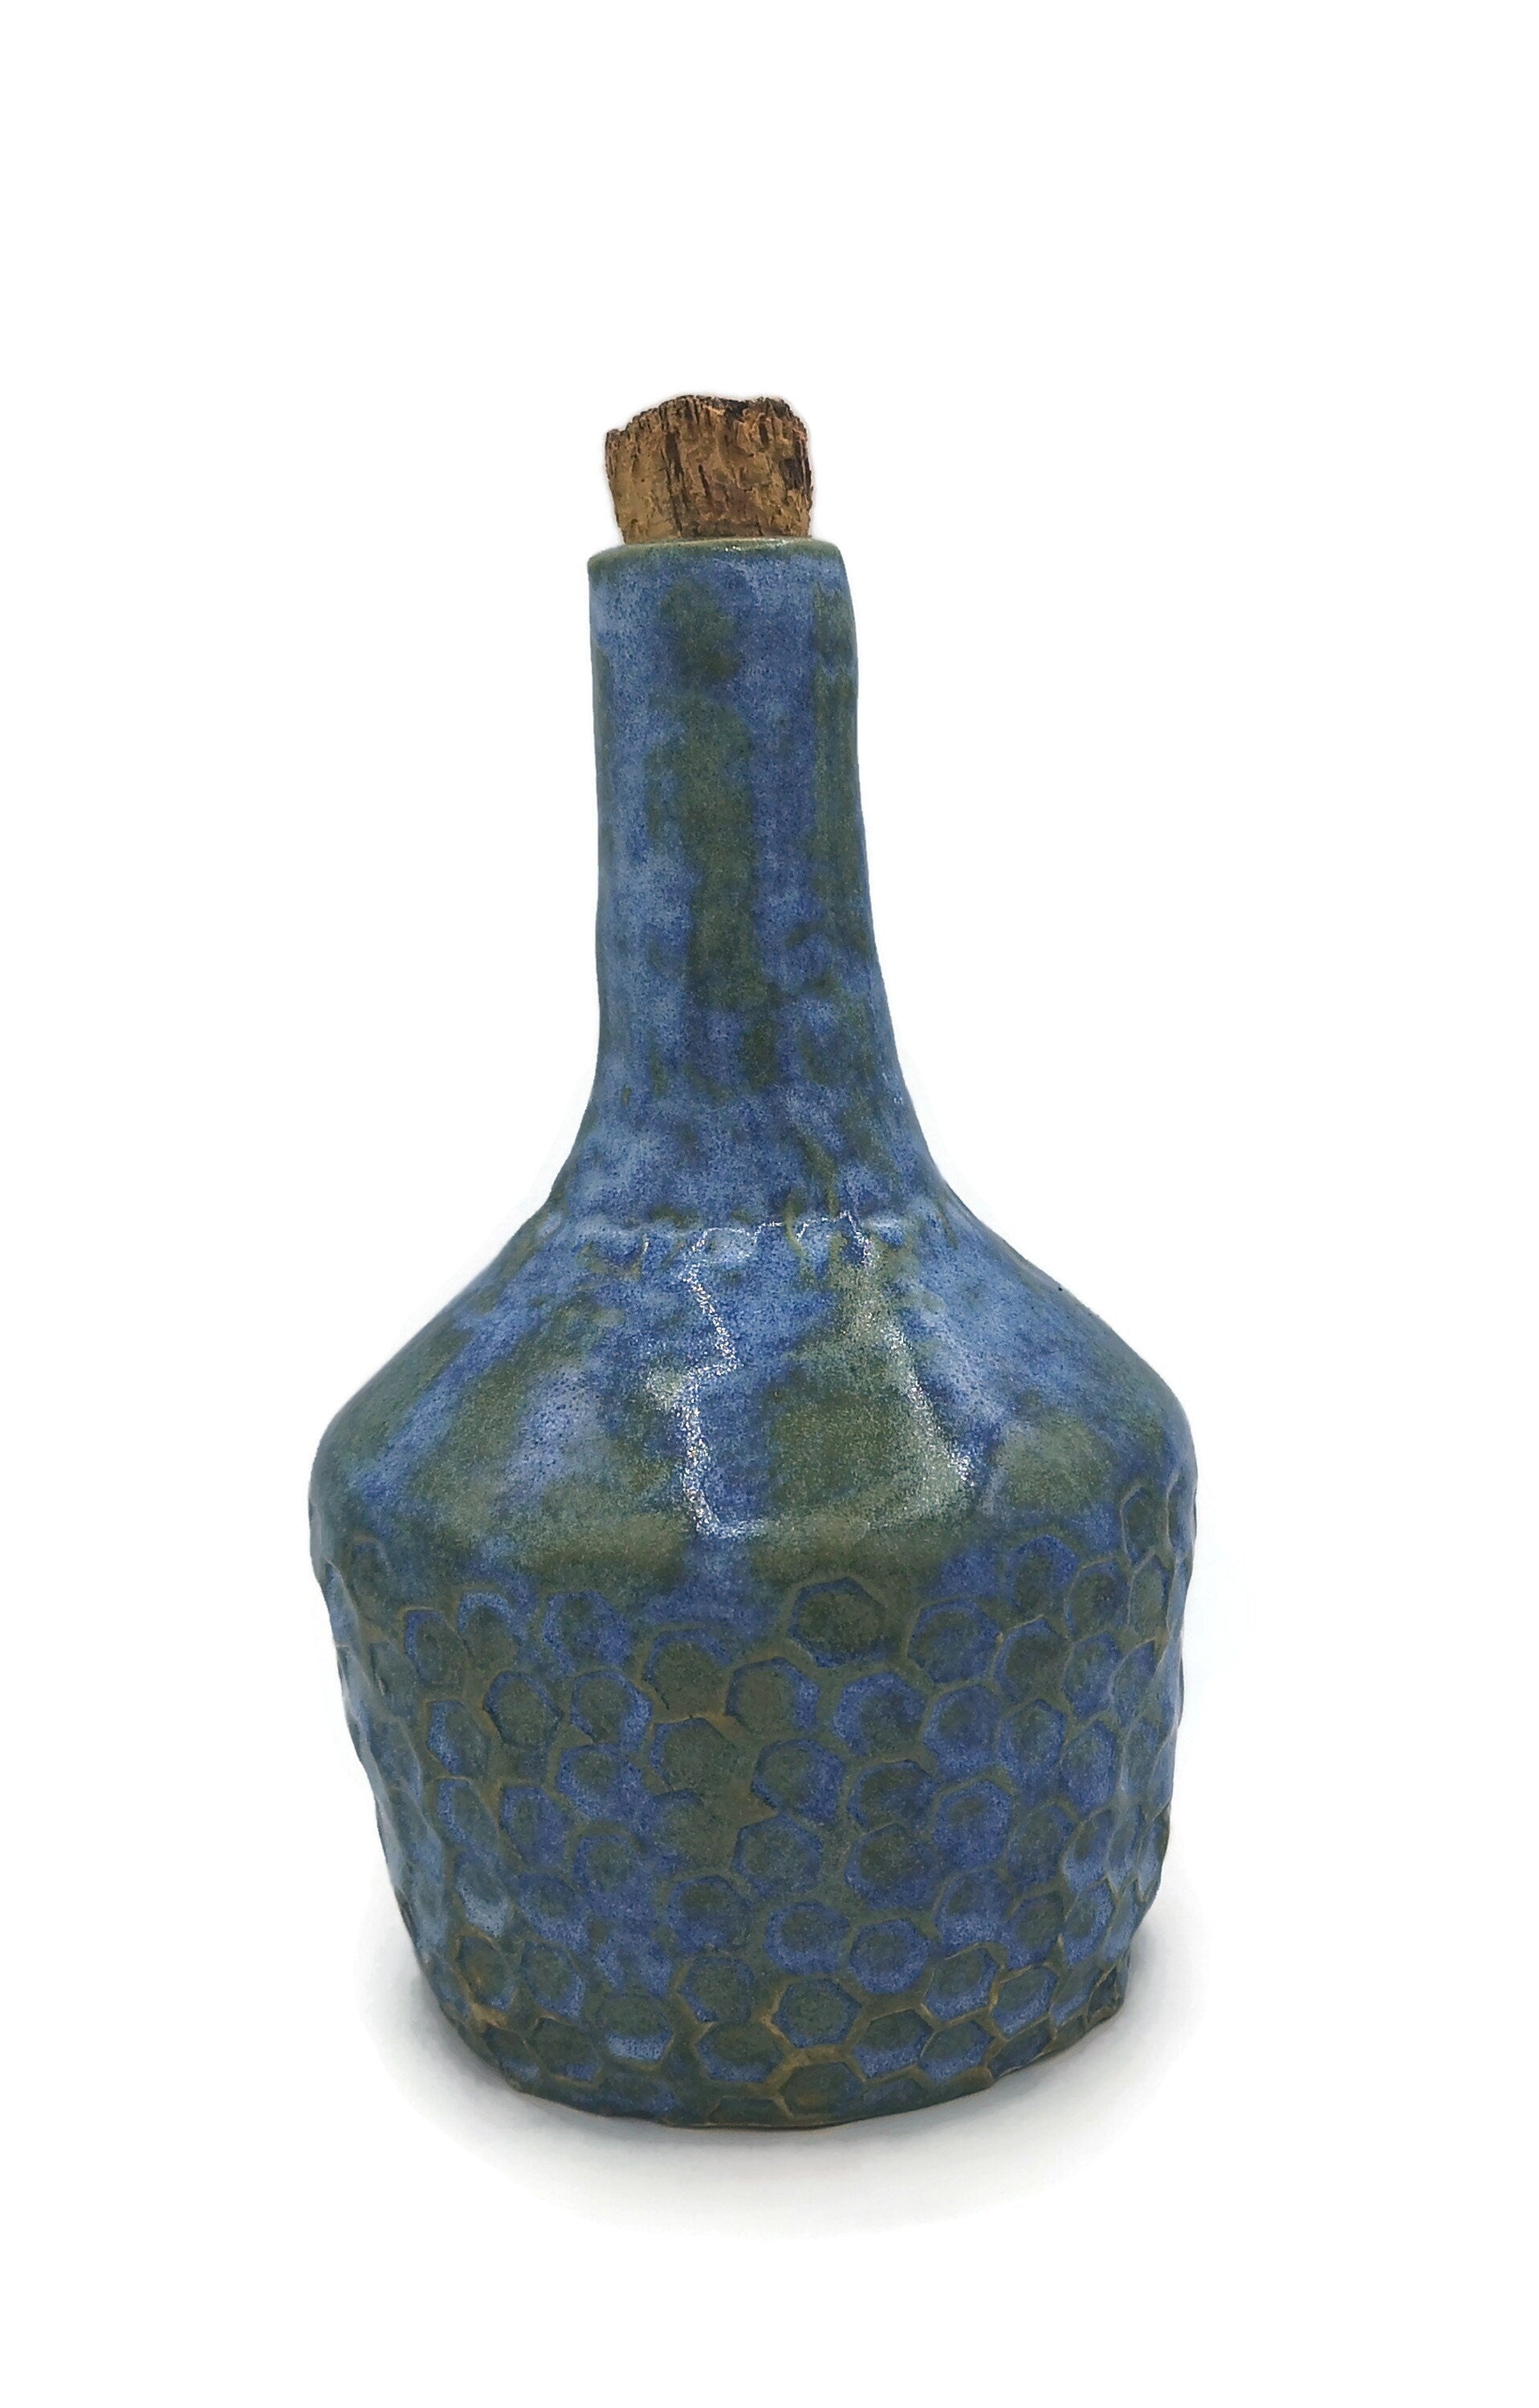 Blue Handmade Ceramic Bottle With Decorative Natural Cork Stopper, Sculptural Vase Honneycomb Texture For Rustic Home Decor - Ceramica Ana Rafael